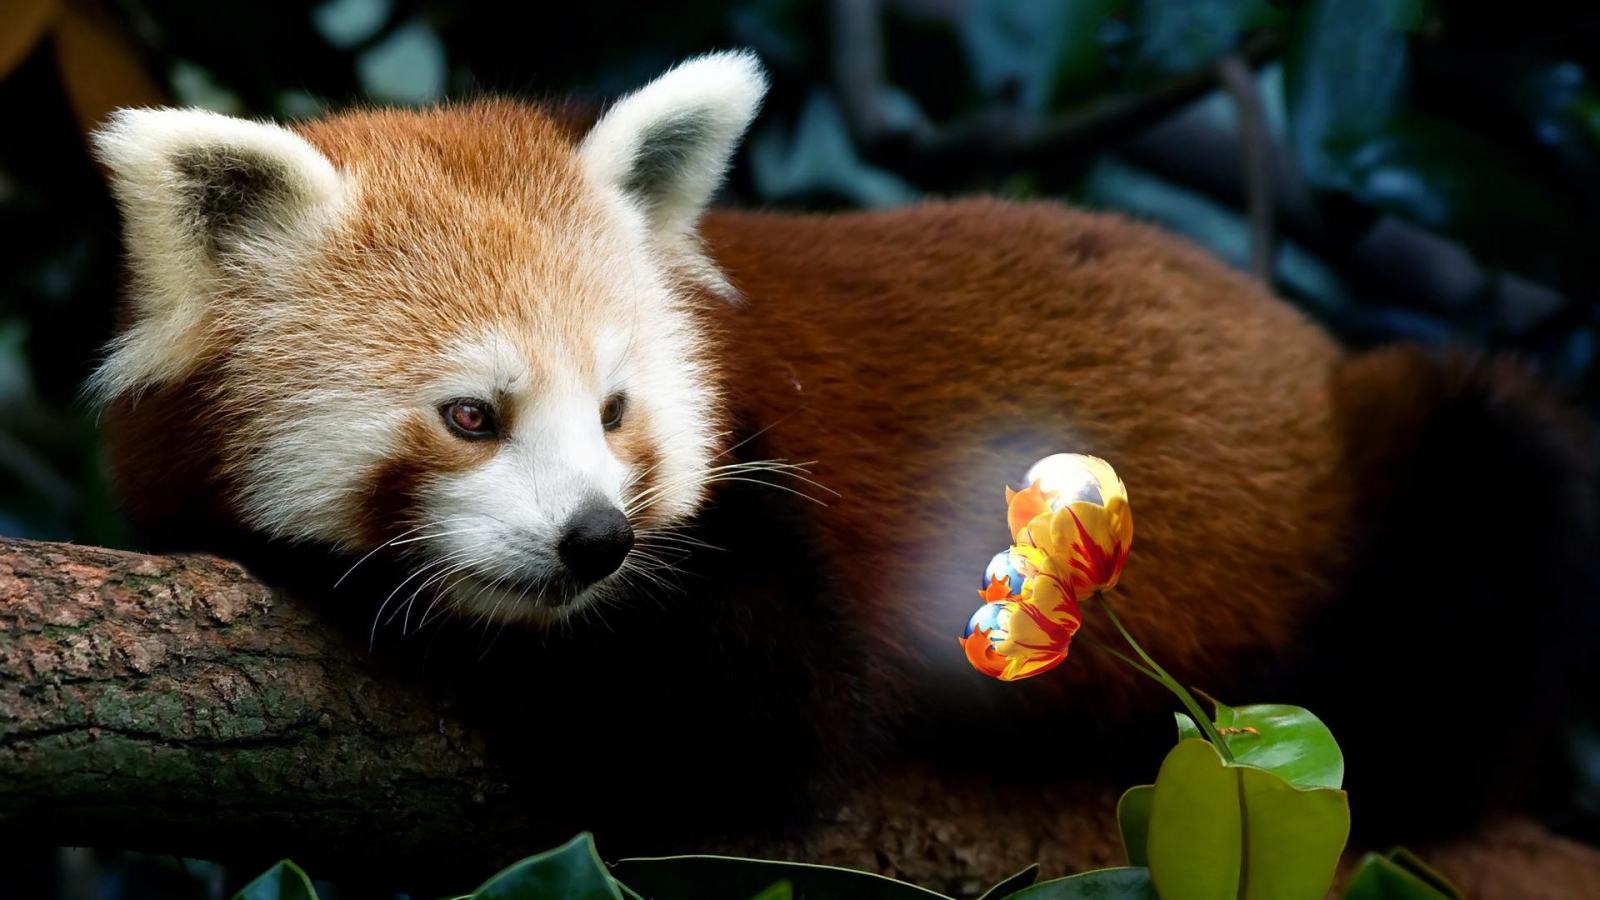 Red Panda Firefox for 1600 x 900 HDTV resolution